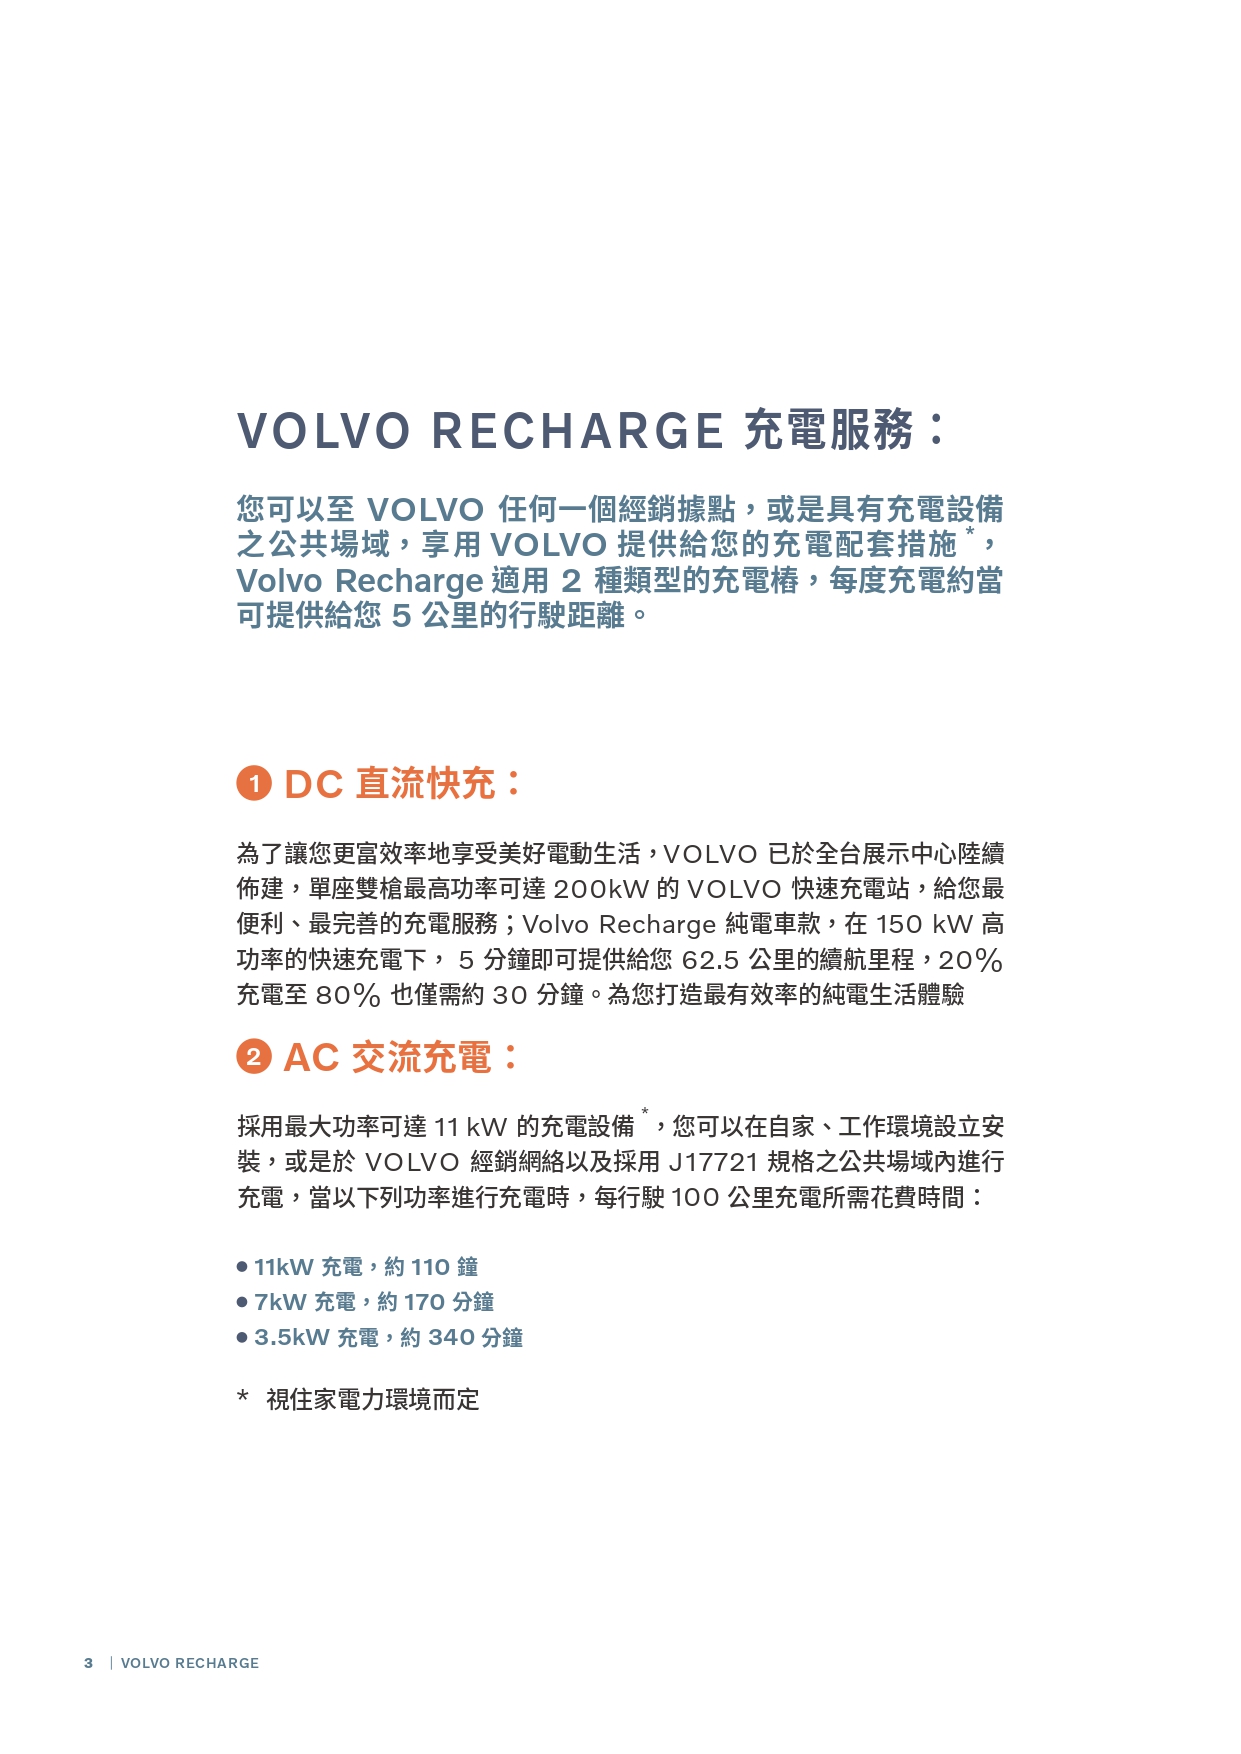 VOLVO 充電網路服務說明_page-0001.jpg